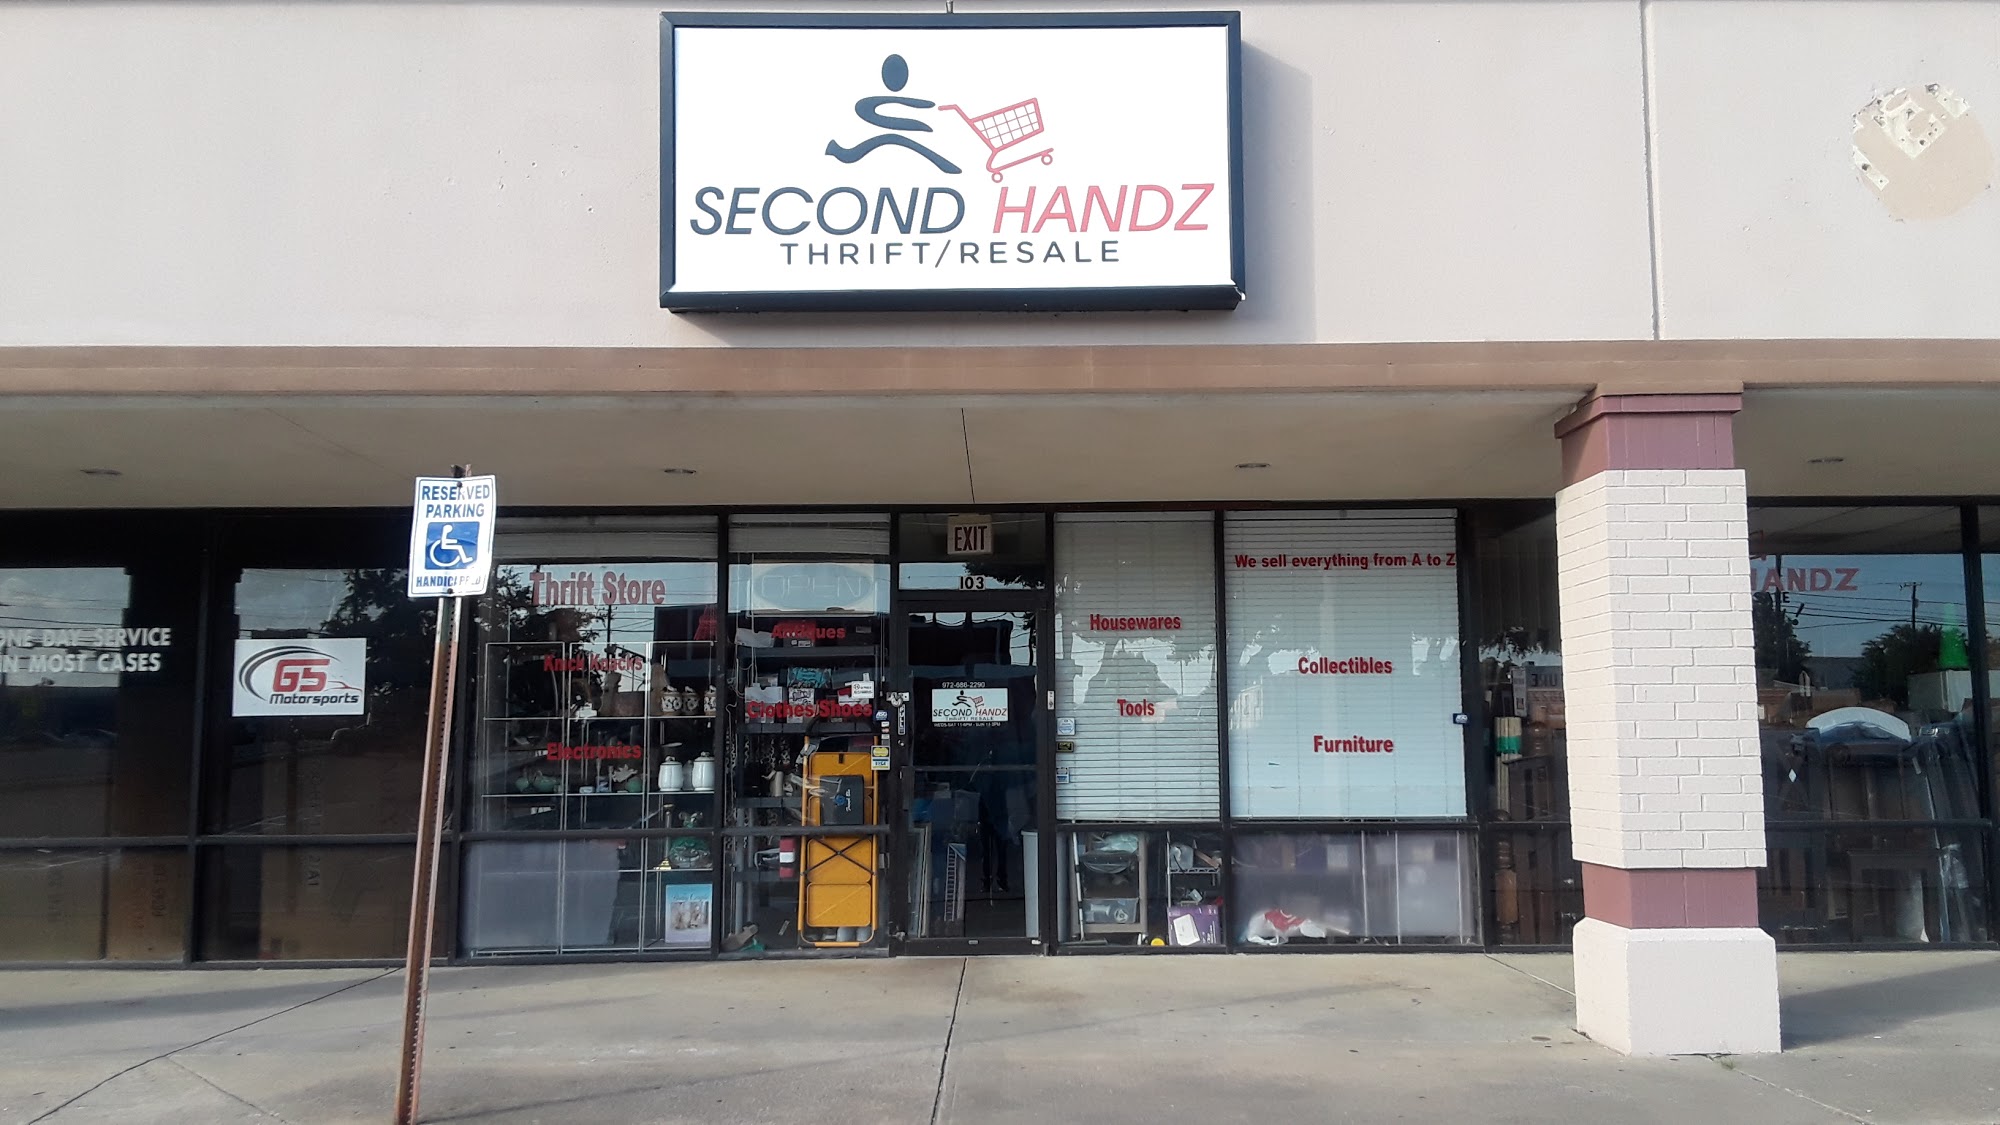 Second Handz Thrift and Resale